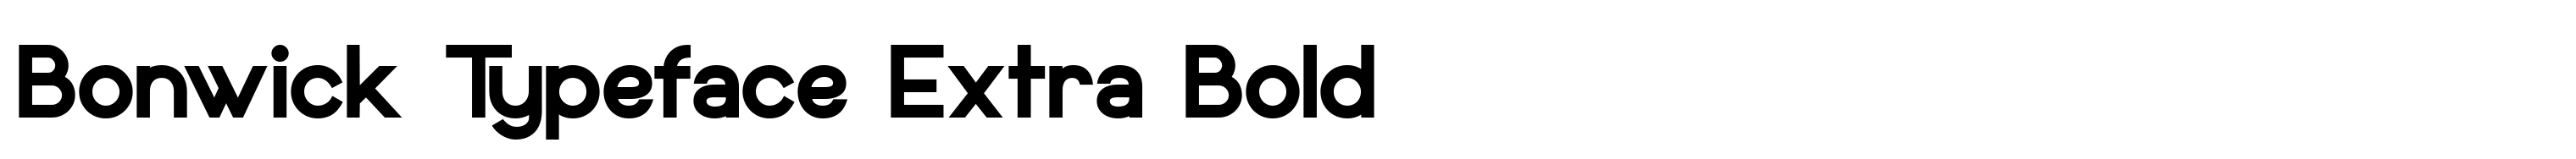 Bonwick Typeface Extra Bold